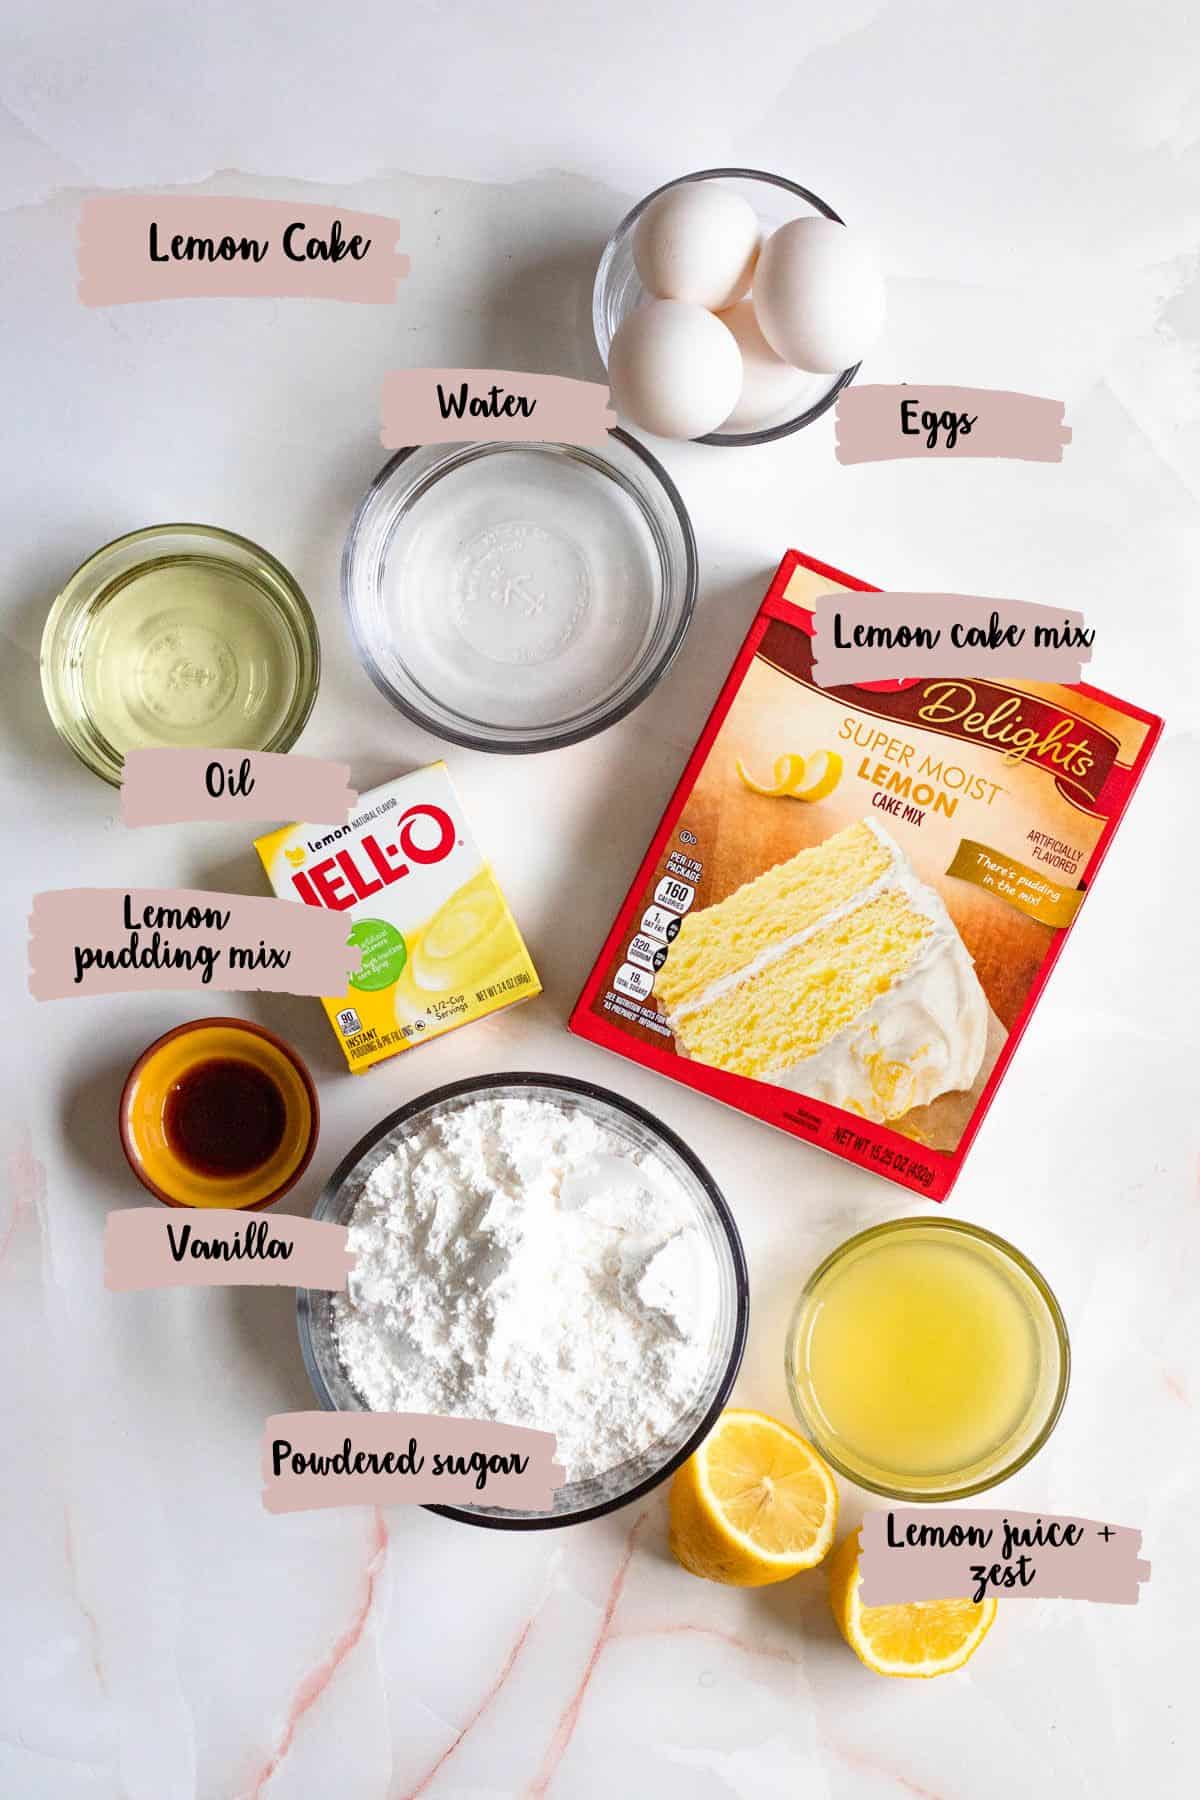 Ingredients shown are used to prepare lemon cake recipe. 